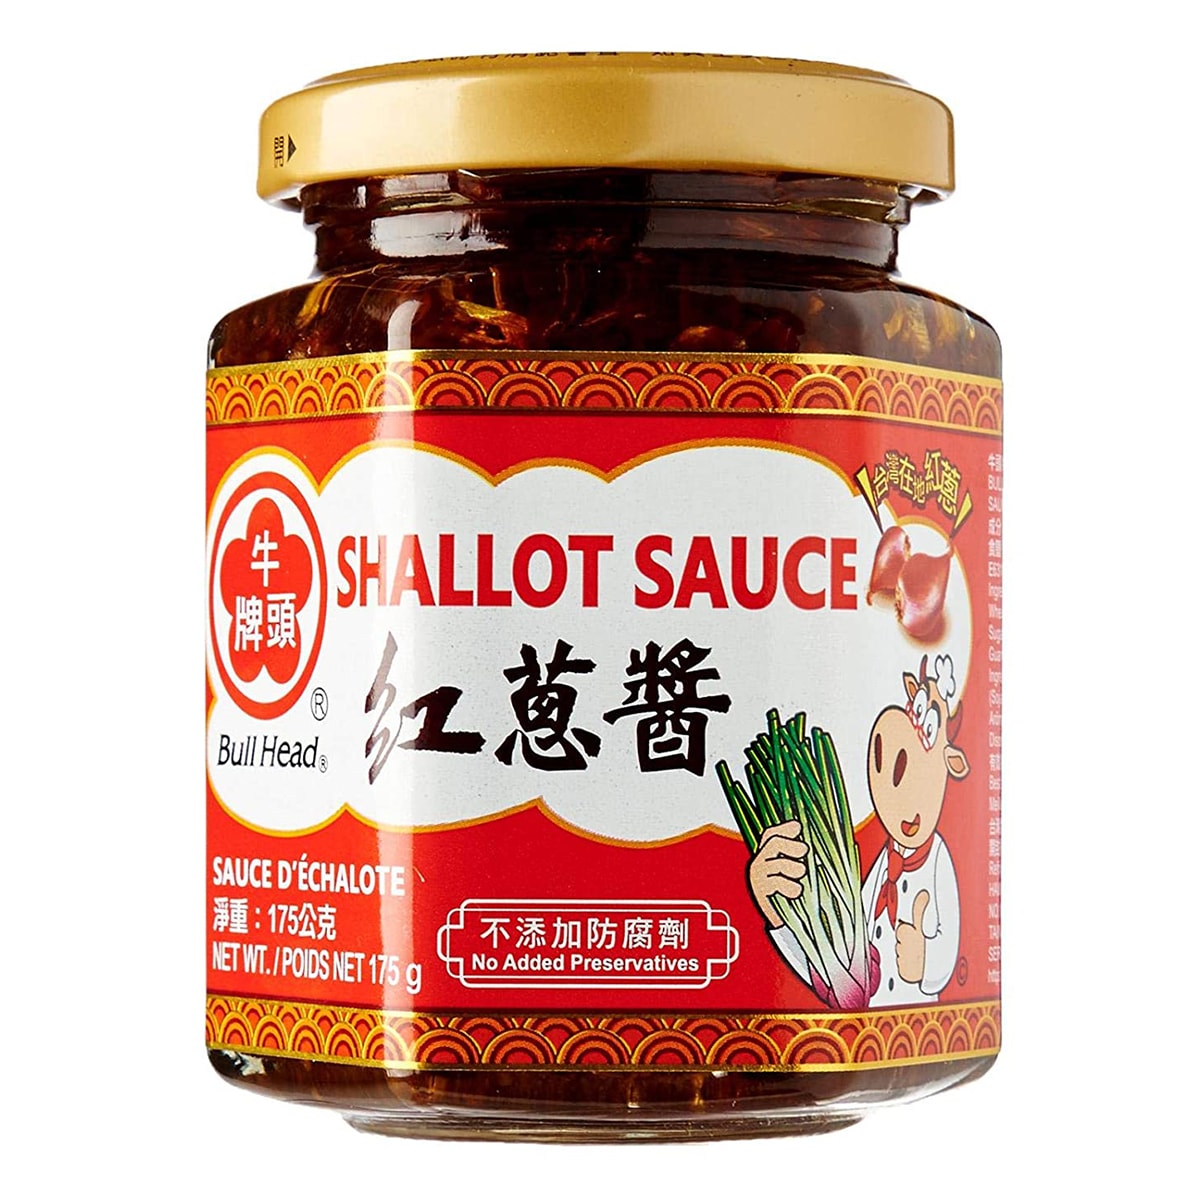 Buy Bull Head Shallot Sauce - 175 gm